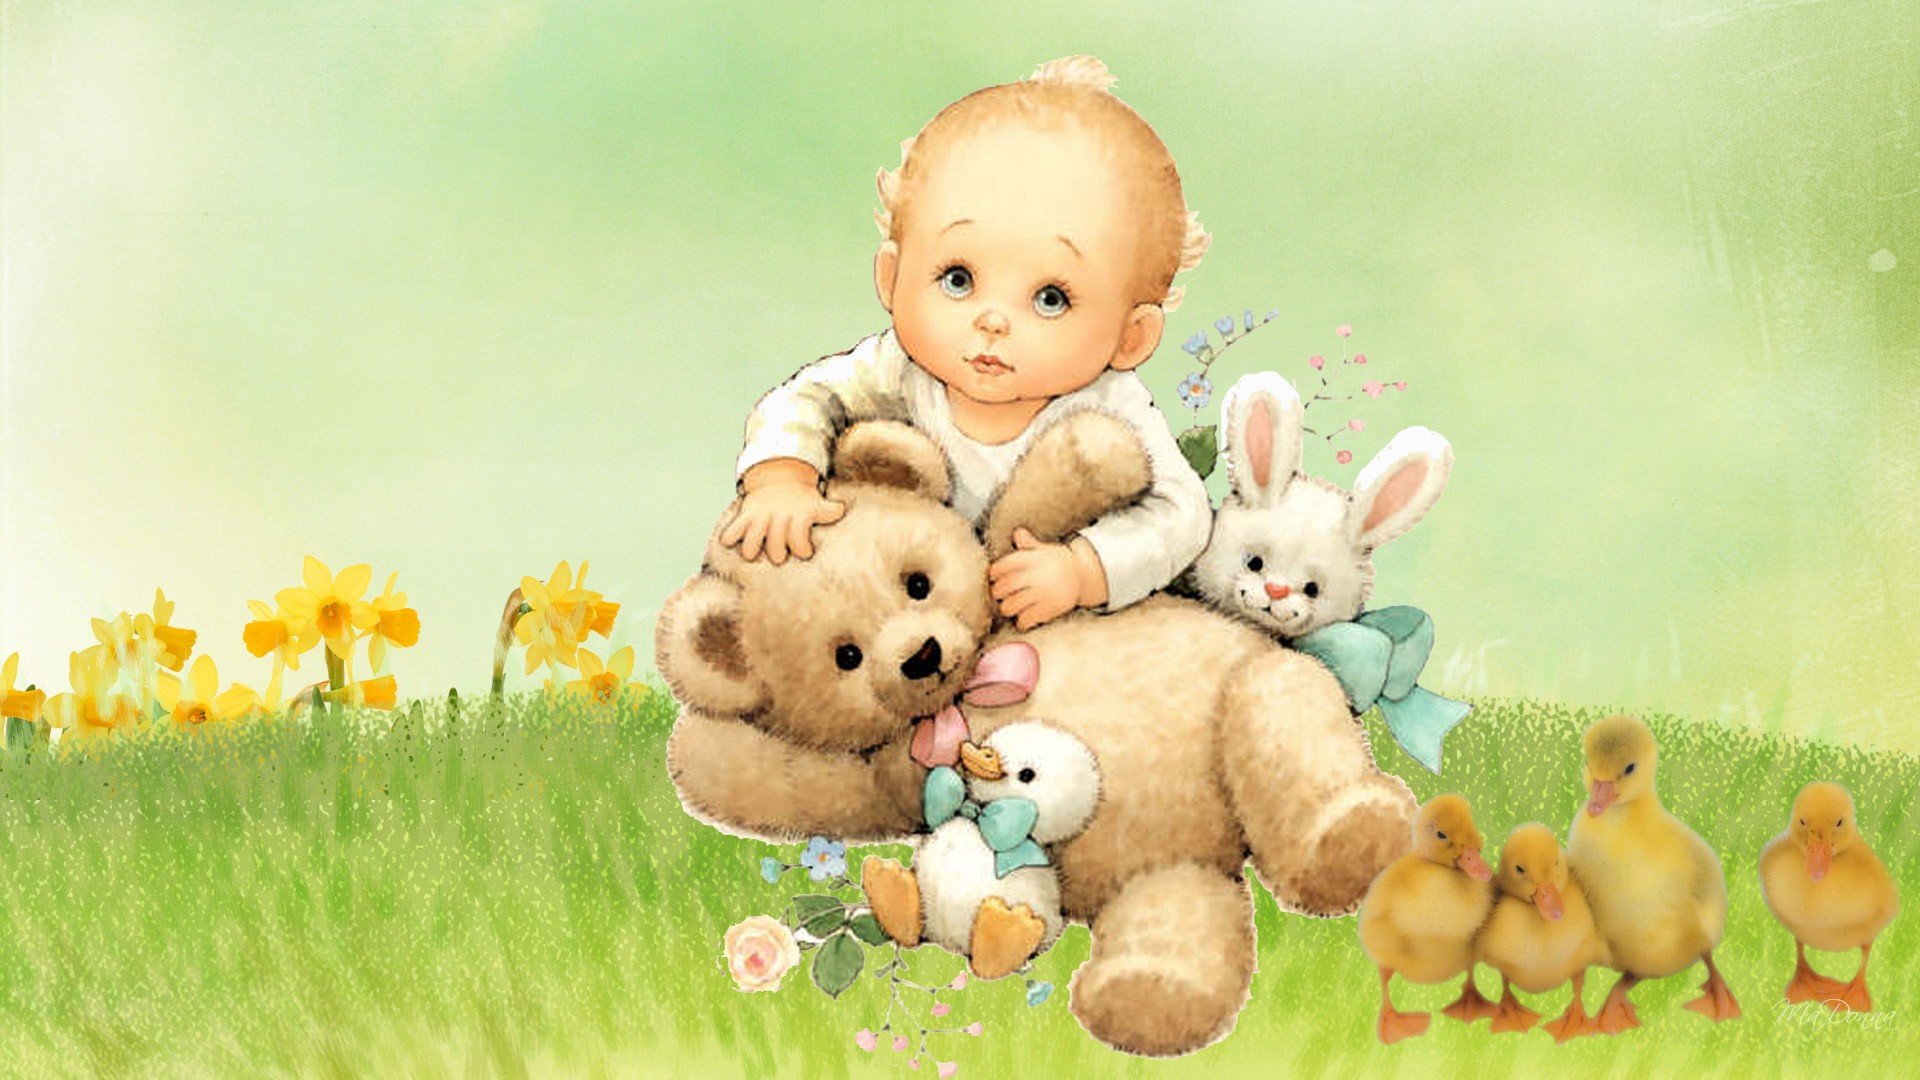 cute teddy bear wallpapers free download for mobile animated wallpapers of teddy bear 1920x1080 wallpaper teahub io teahub io